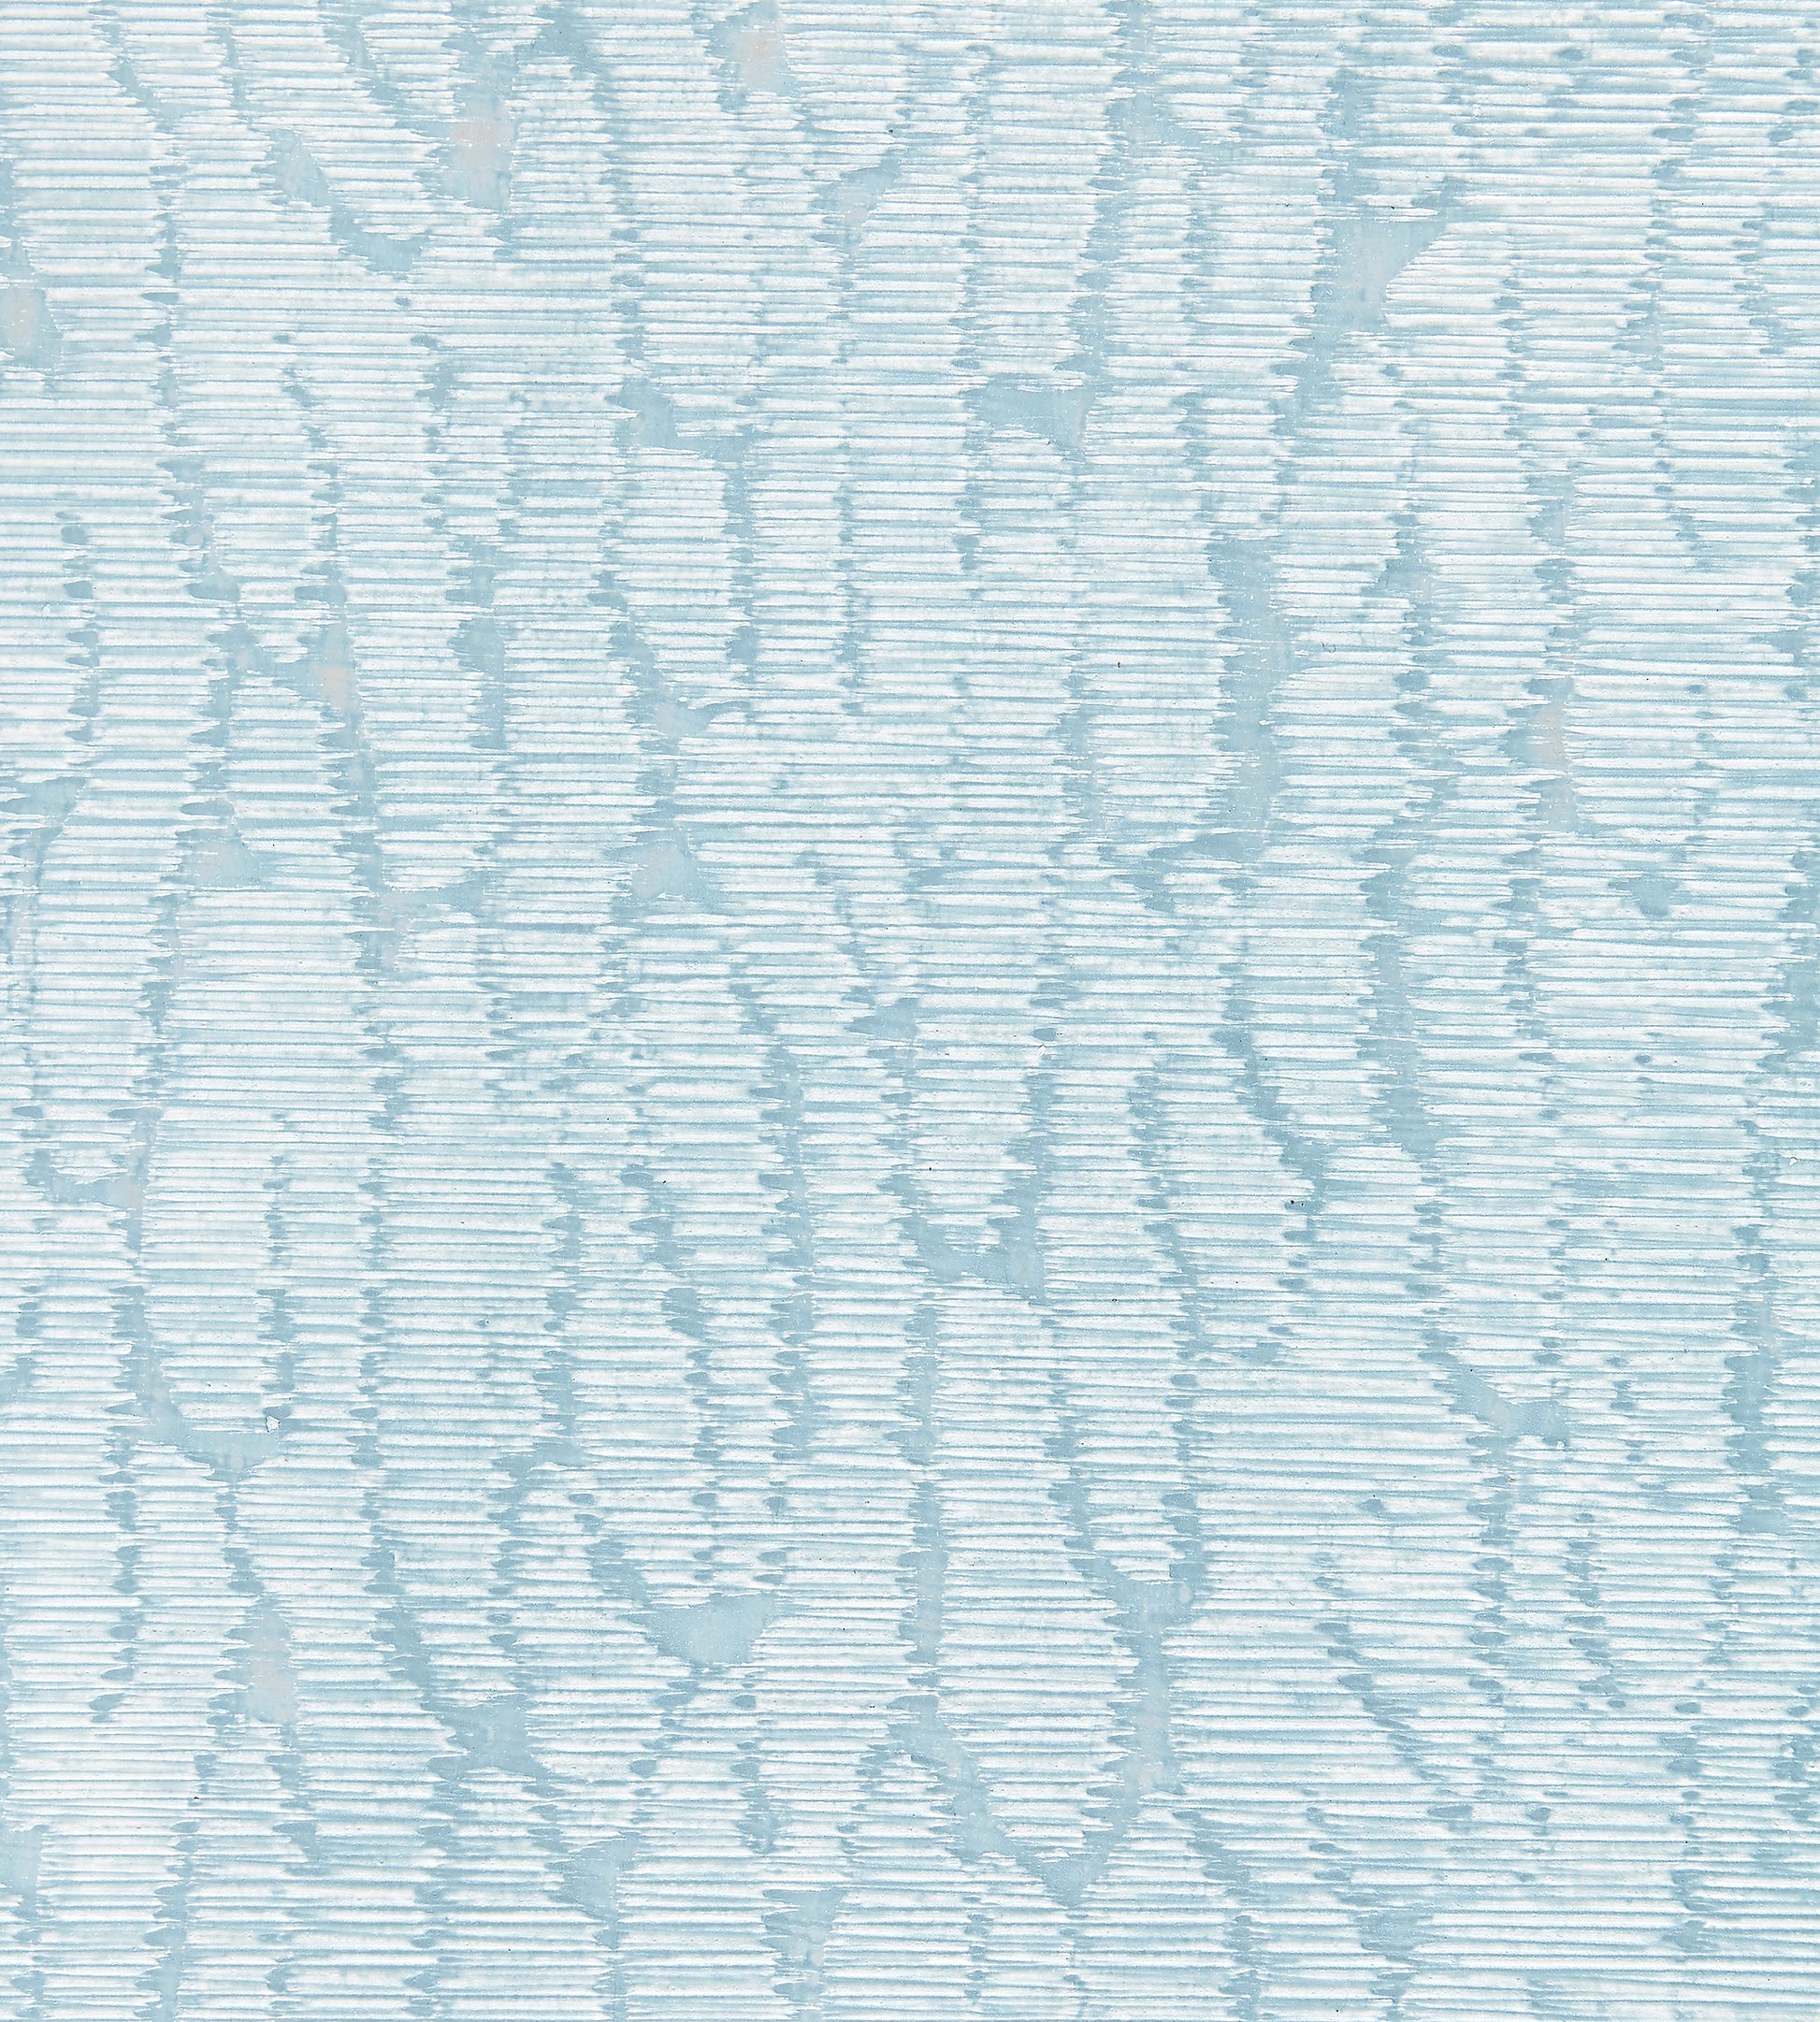 Acquire Scalamandre Wallpaper Pattern Sc 0003Wp88369 Name Rainshadow Blue Ice Texture Wallpaper